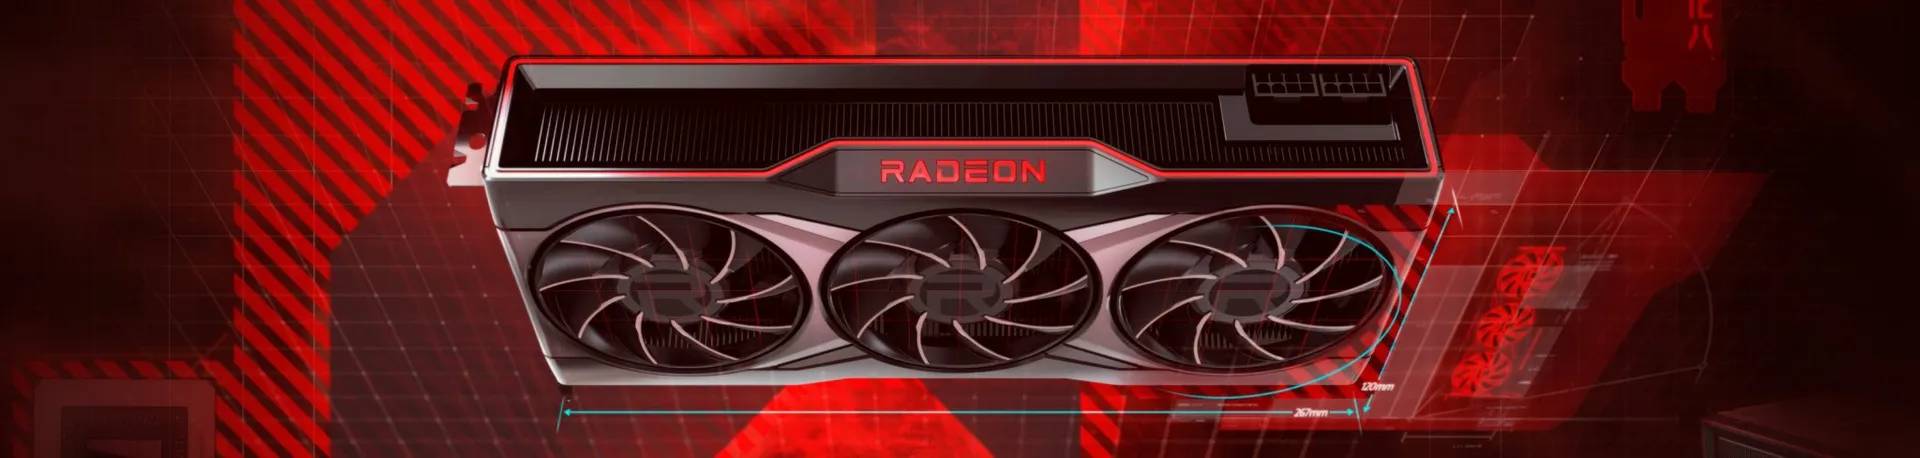 AMD-Radeon-Hero-Banner-2-2048x489-1